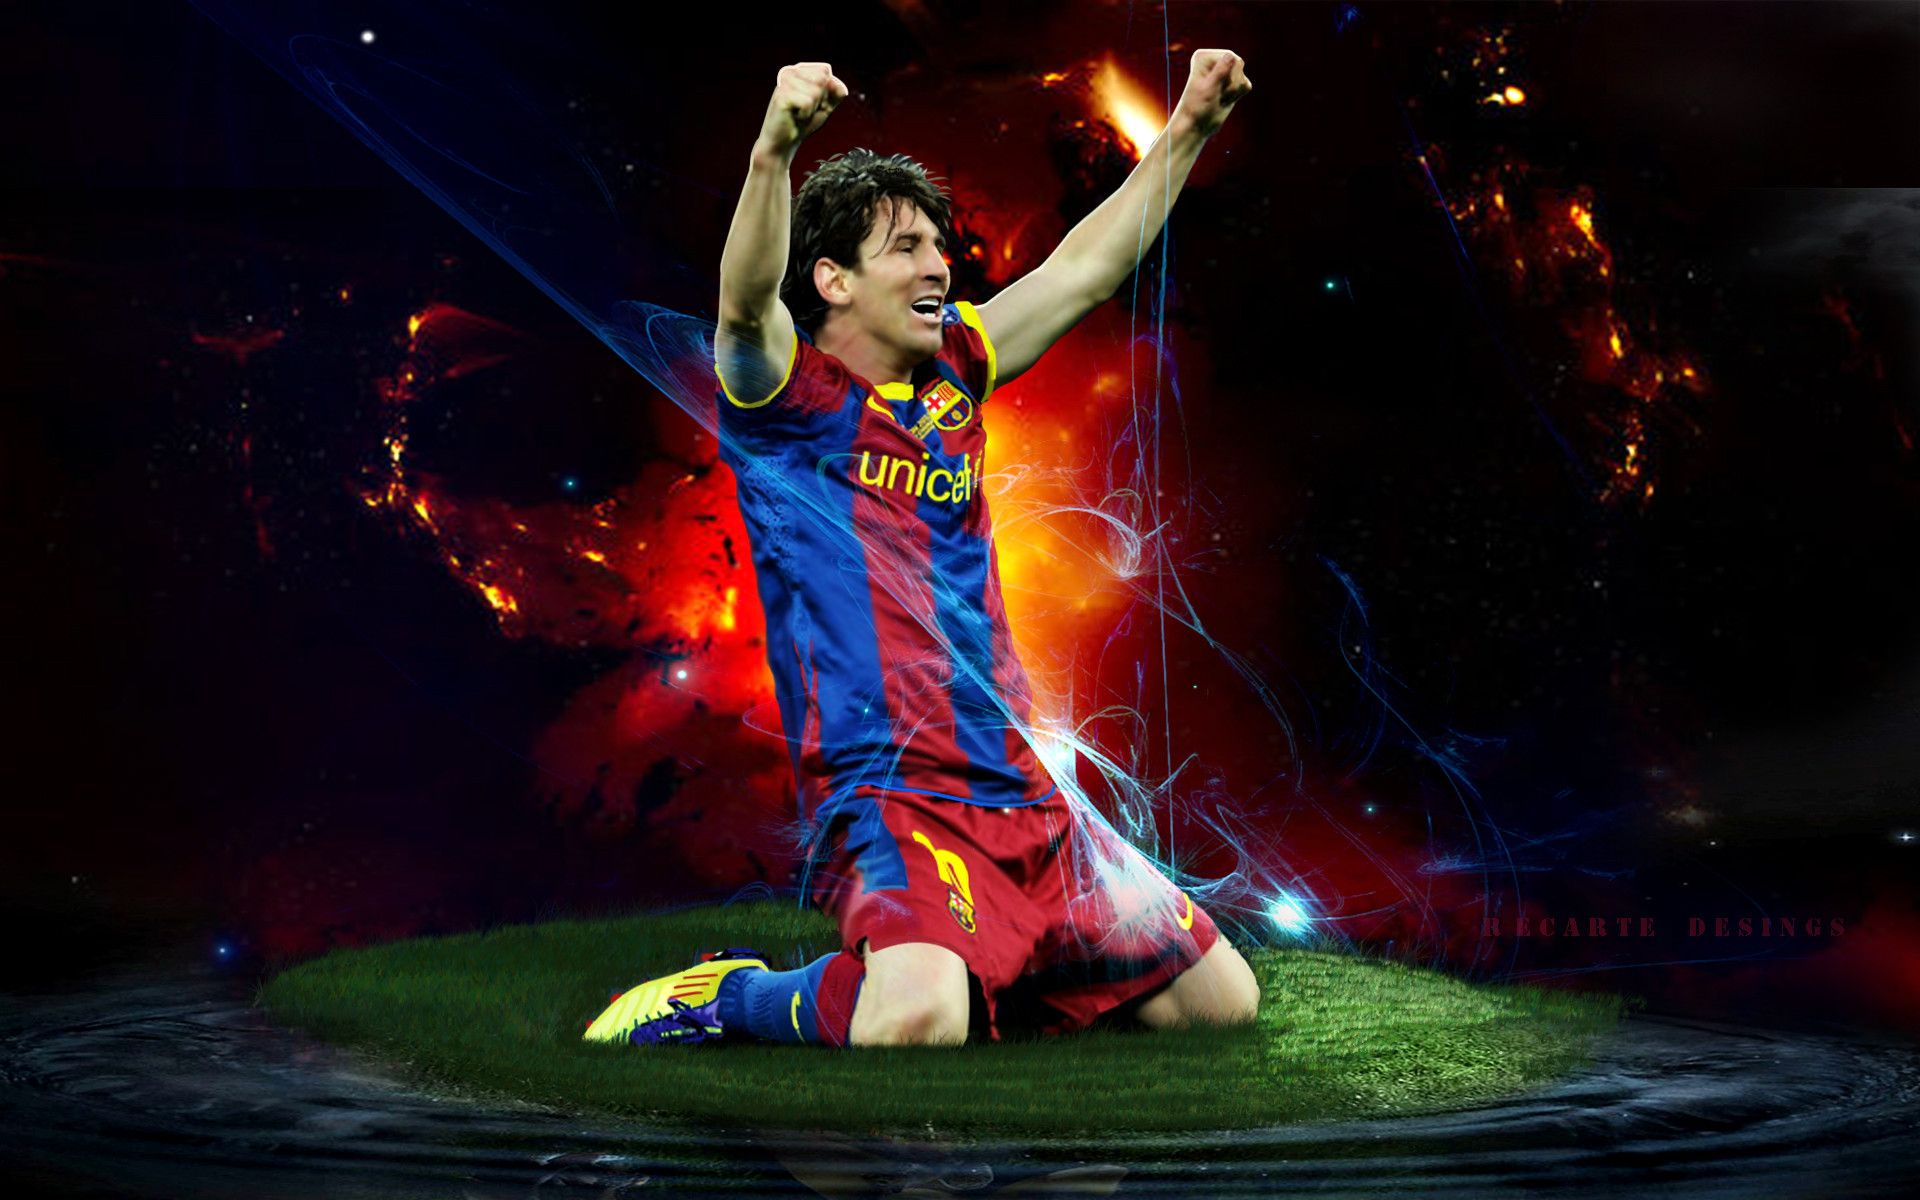 Messi Celebration Wallpaper Wallpaper HD. Lionel messi wallpaper, Lionel messi, Messi soccer